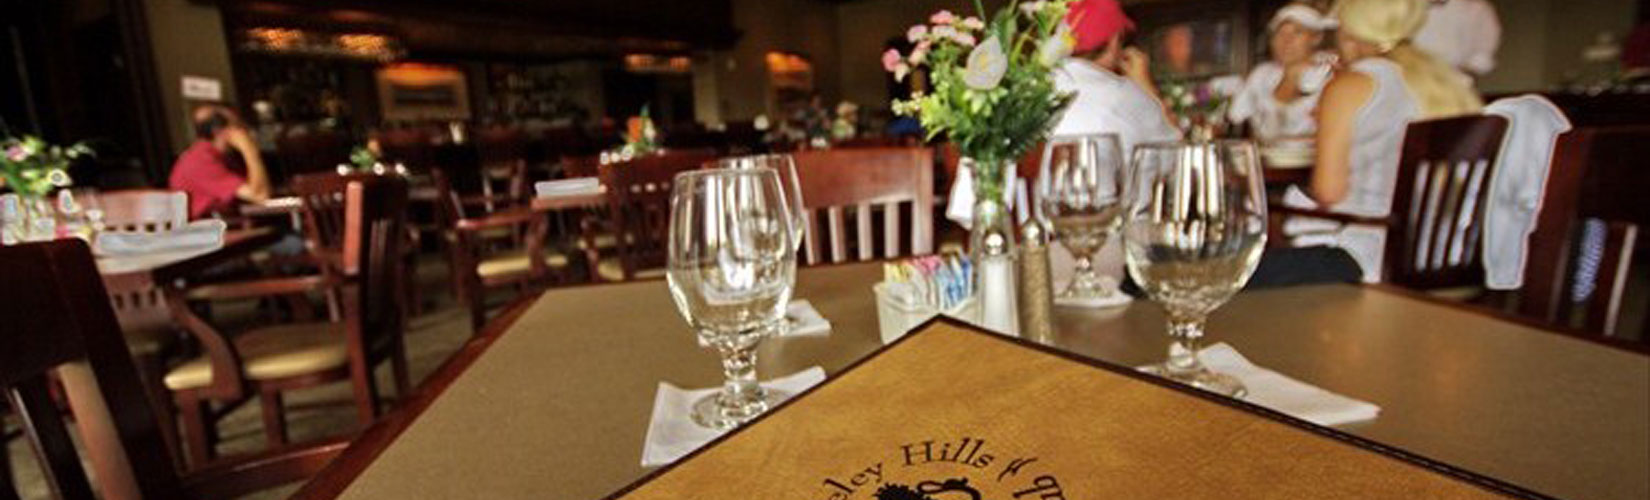 Berkeley Hills Country Club Dining Header Image